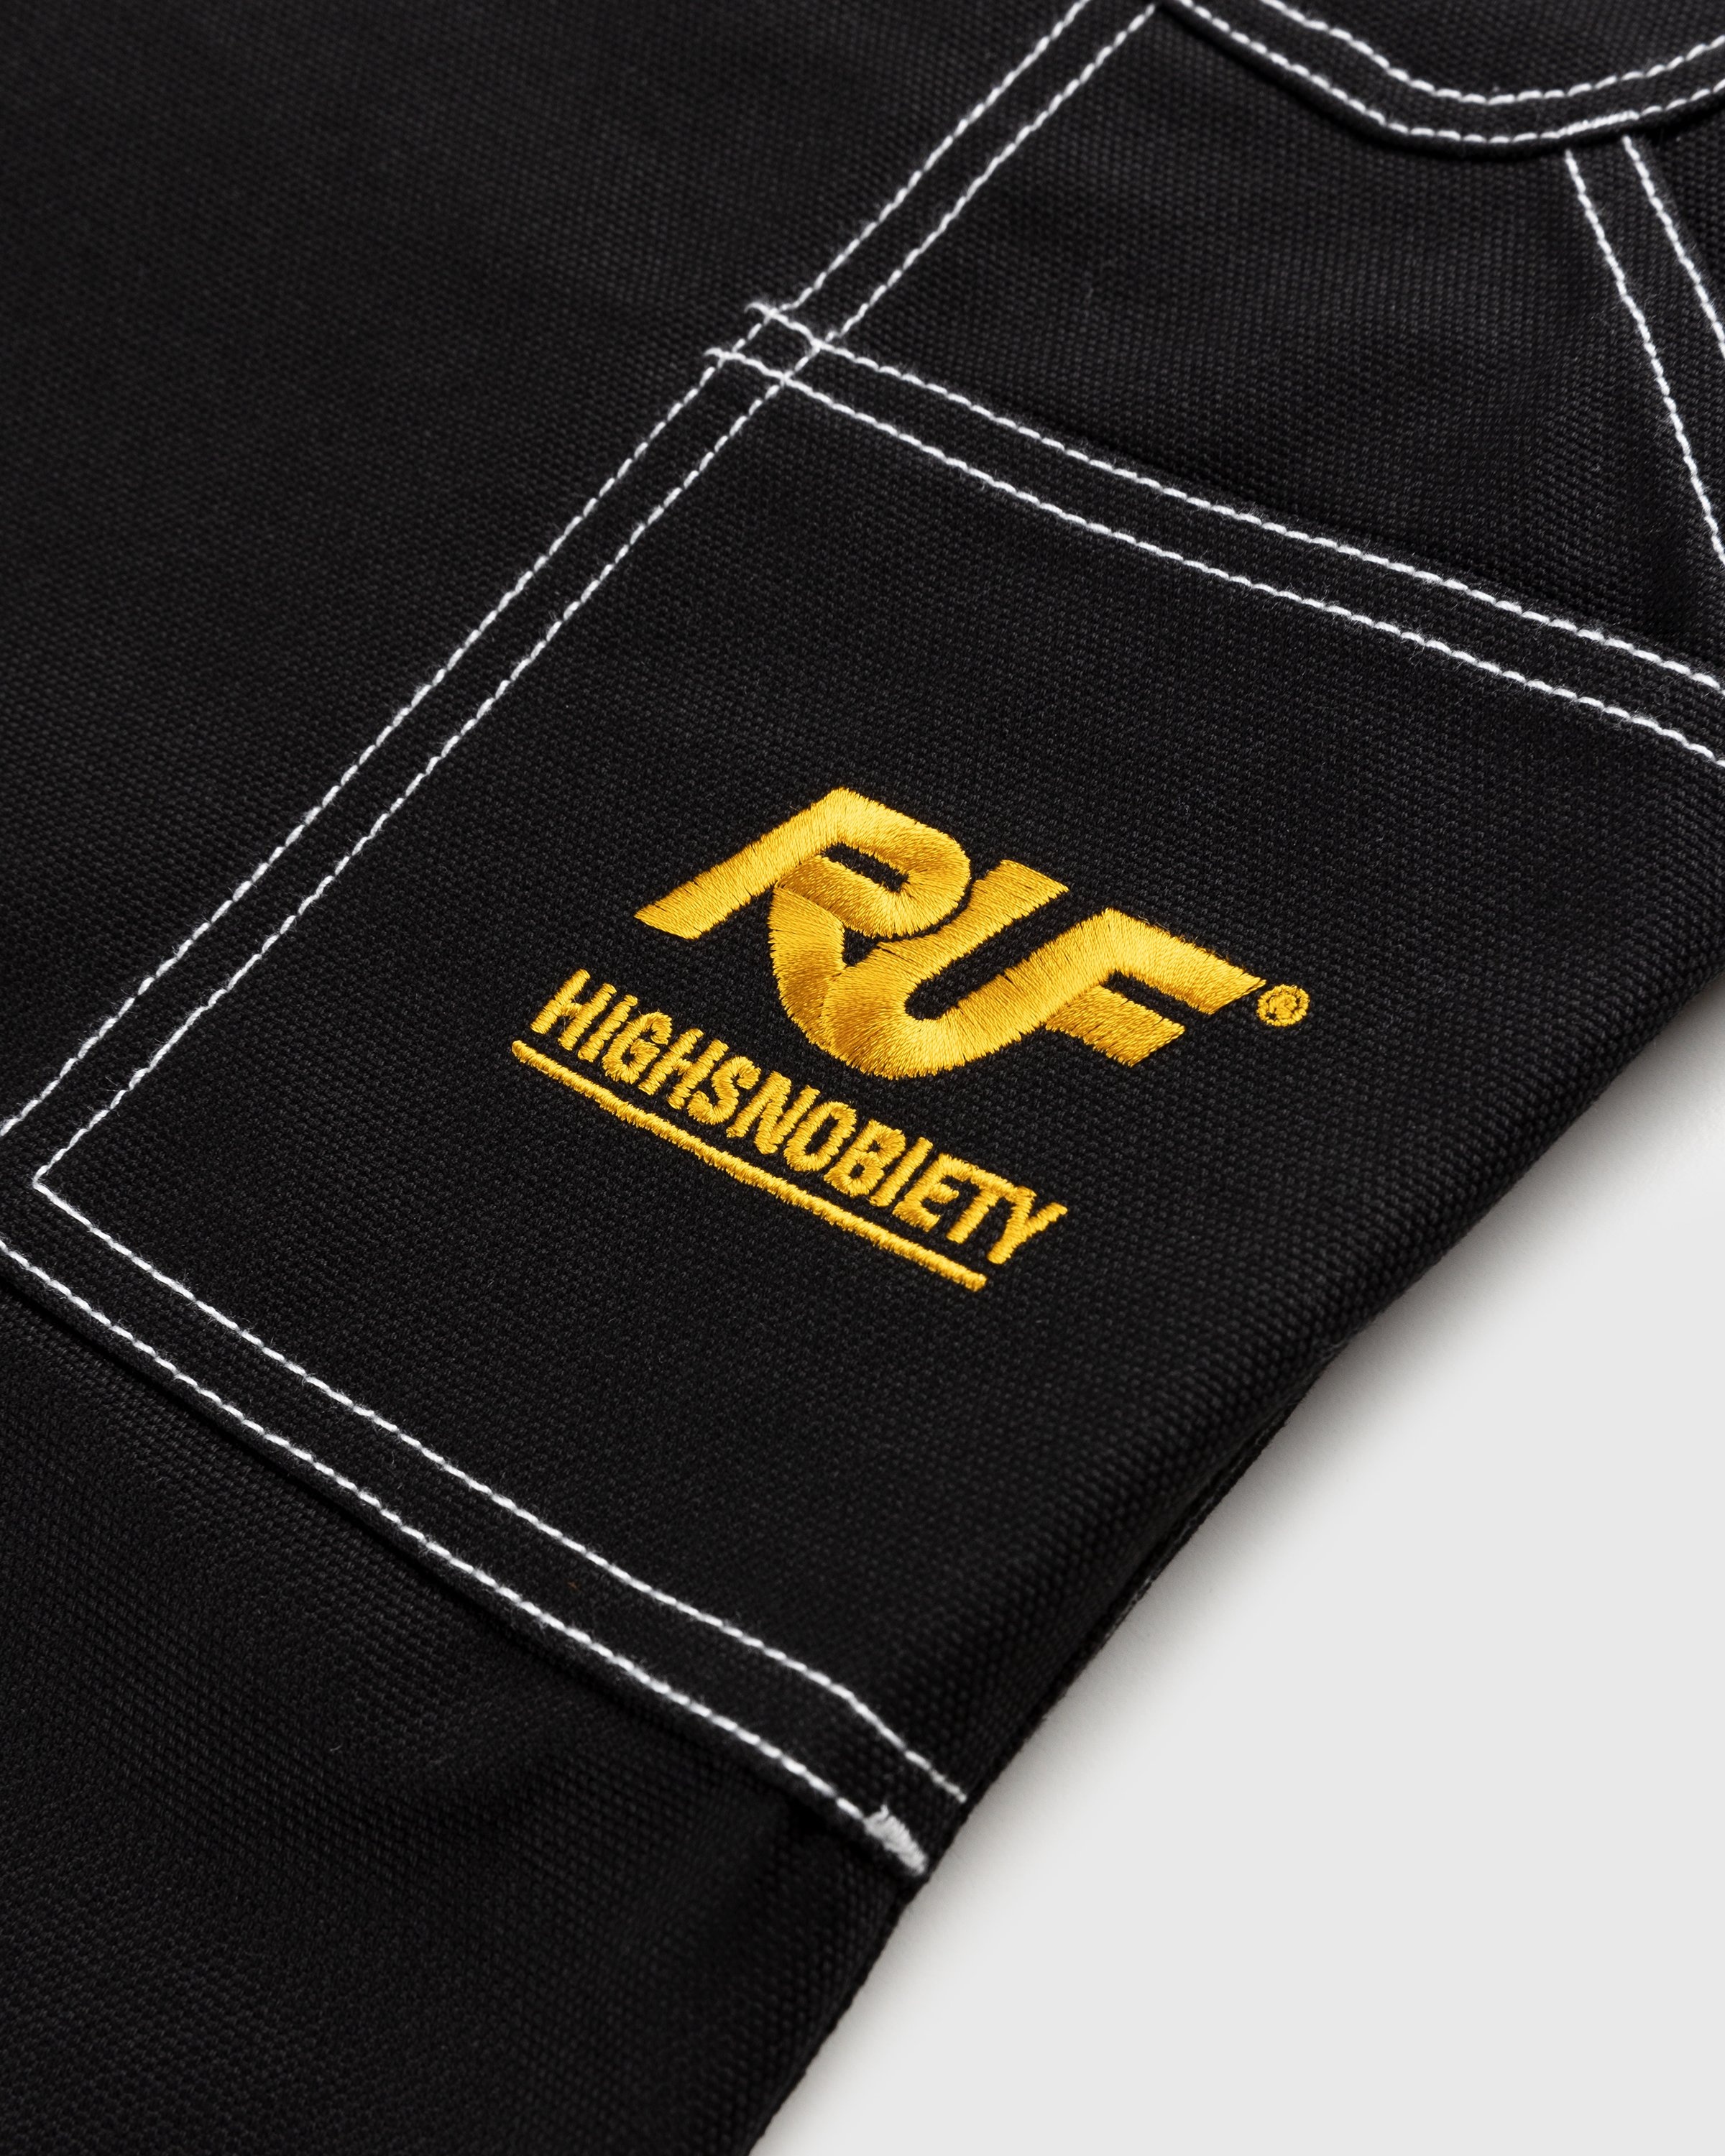 RUF x Highsnobiety – Cotton Work Pants Black - Work Pants - Black - Image 5